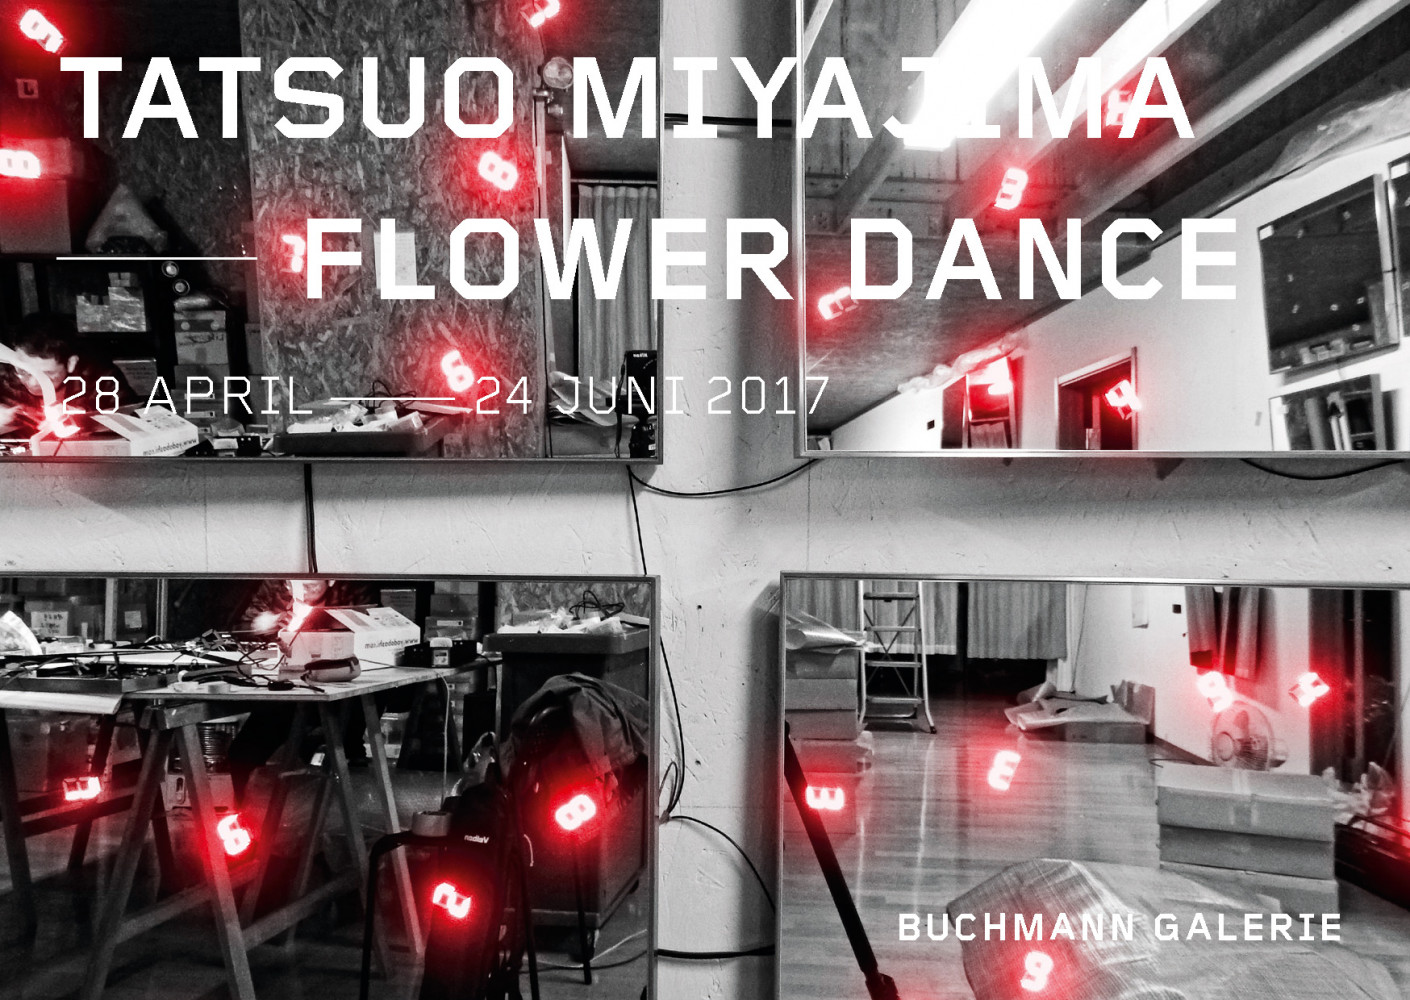 Tatsuo Miyajima, ‘Flower Dance’